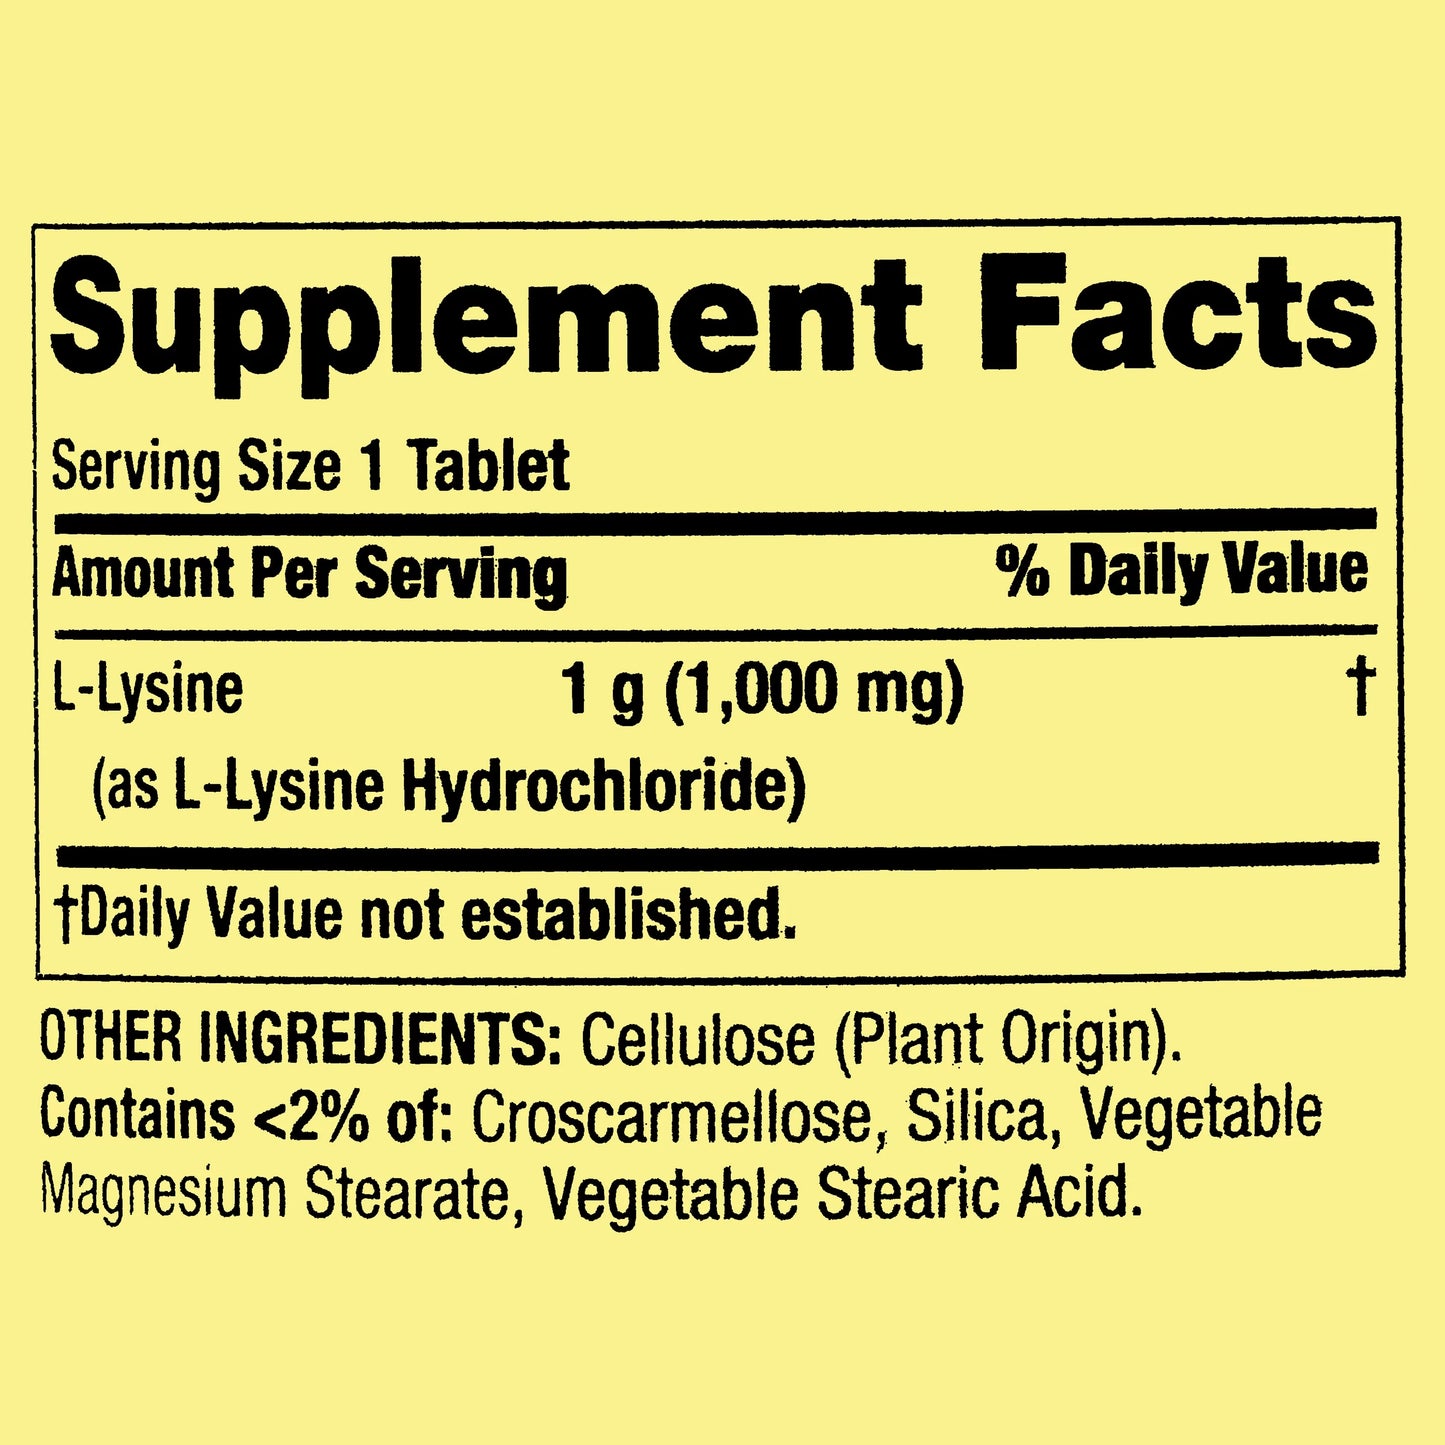 Spring Valley - L-lisina 1000 mg, 100 comprimidos